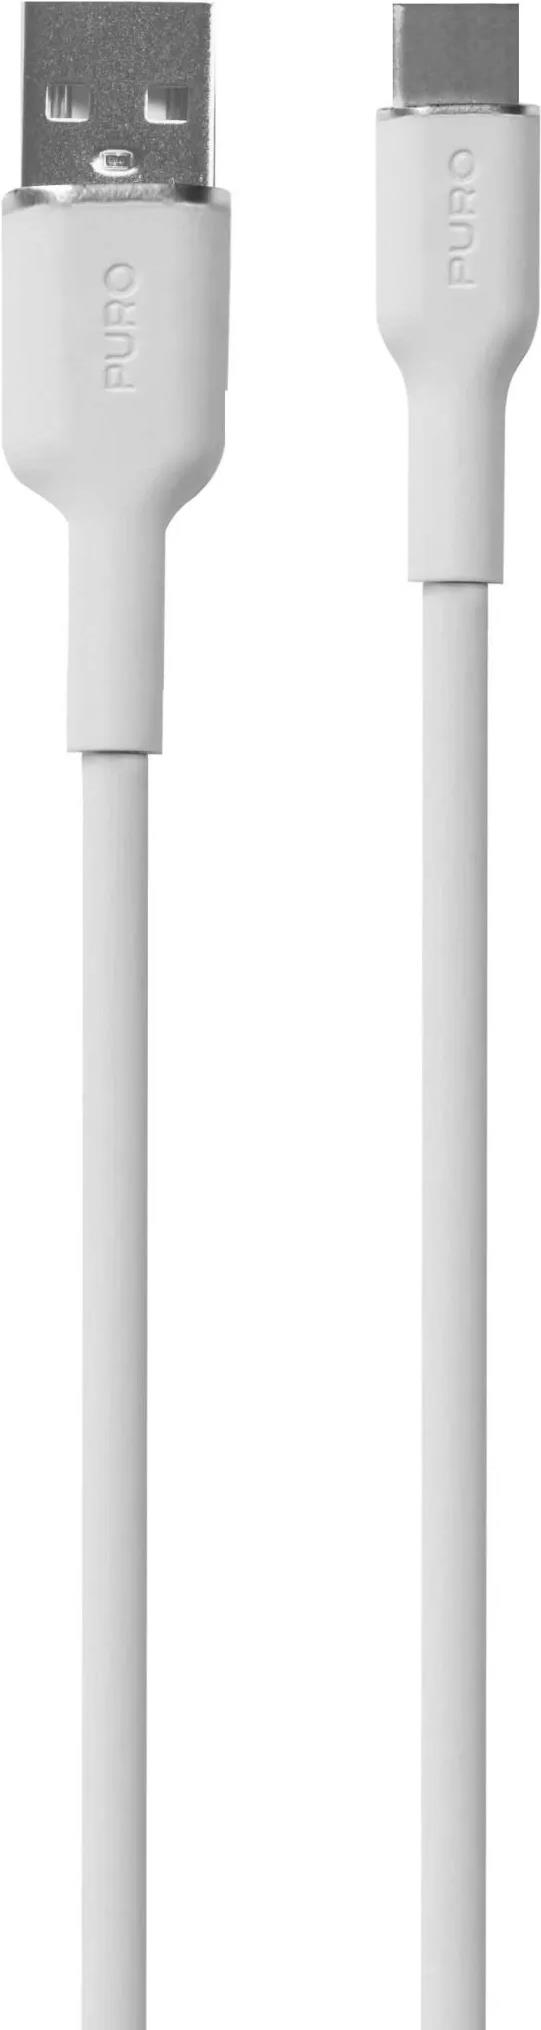 PURO PUUSBCICONWHI. Kabellänge: 1,5 m, Anschluss 1: USB A, Anschluss 2: USB C, USB-Version: USB 3.2 Gen 1 (3.1 Gen 1), Produktfarbe: Weiß (PUUSBCICONWHI)